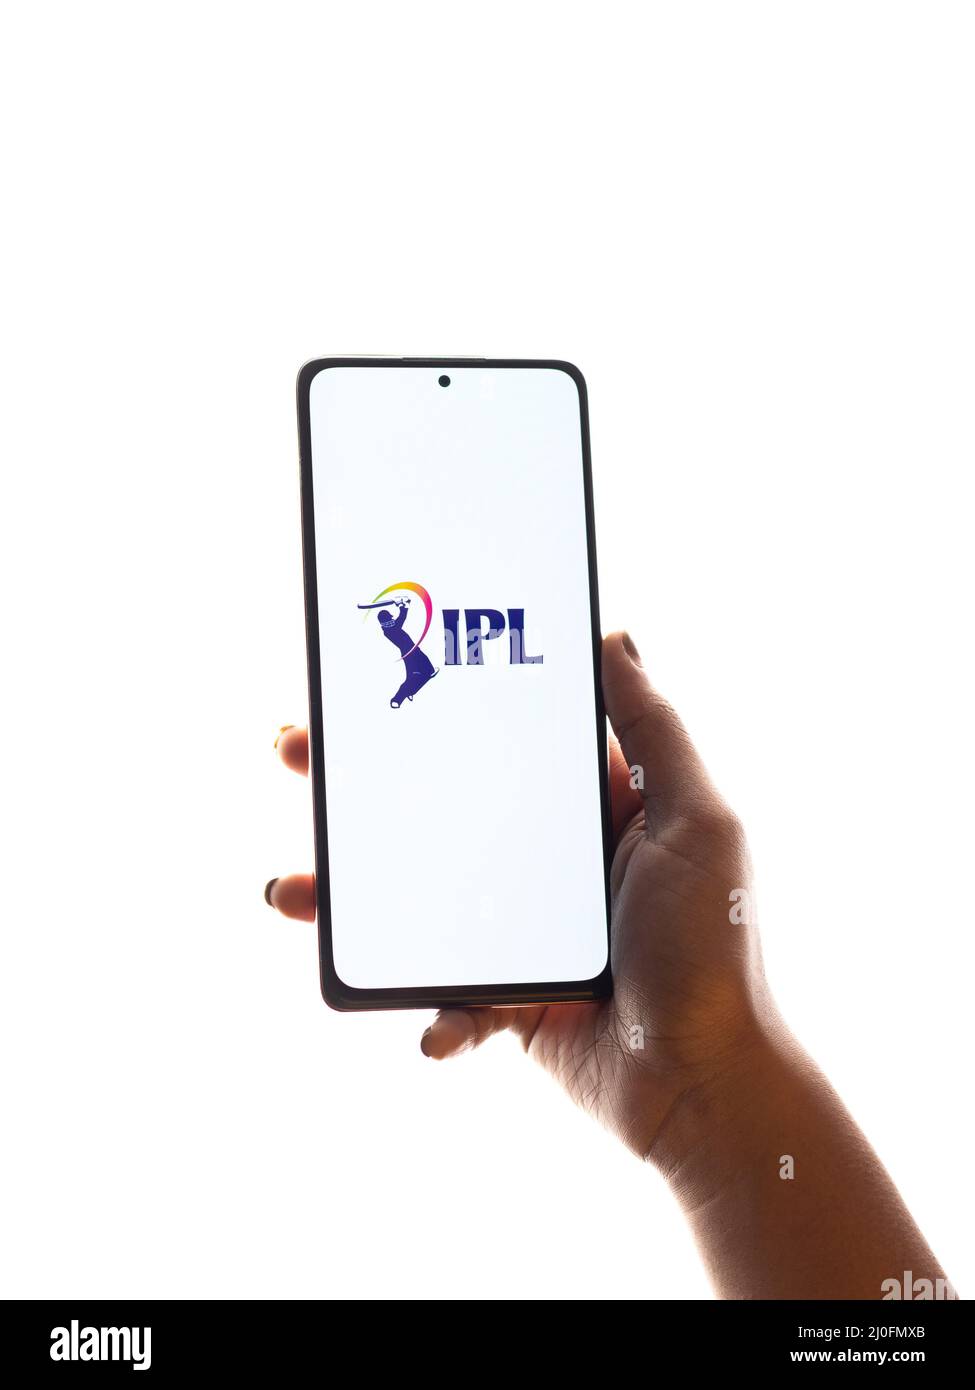 West Bangal, India - March 18, 2022 : IPL indian premier league logo on phone screen stock image. Stock Photo